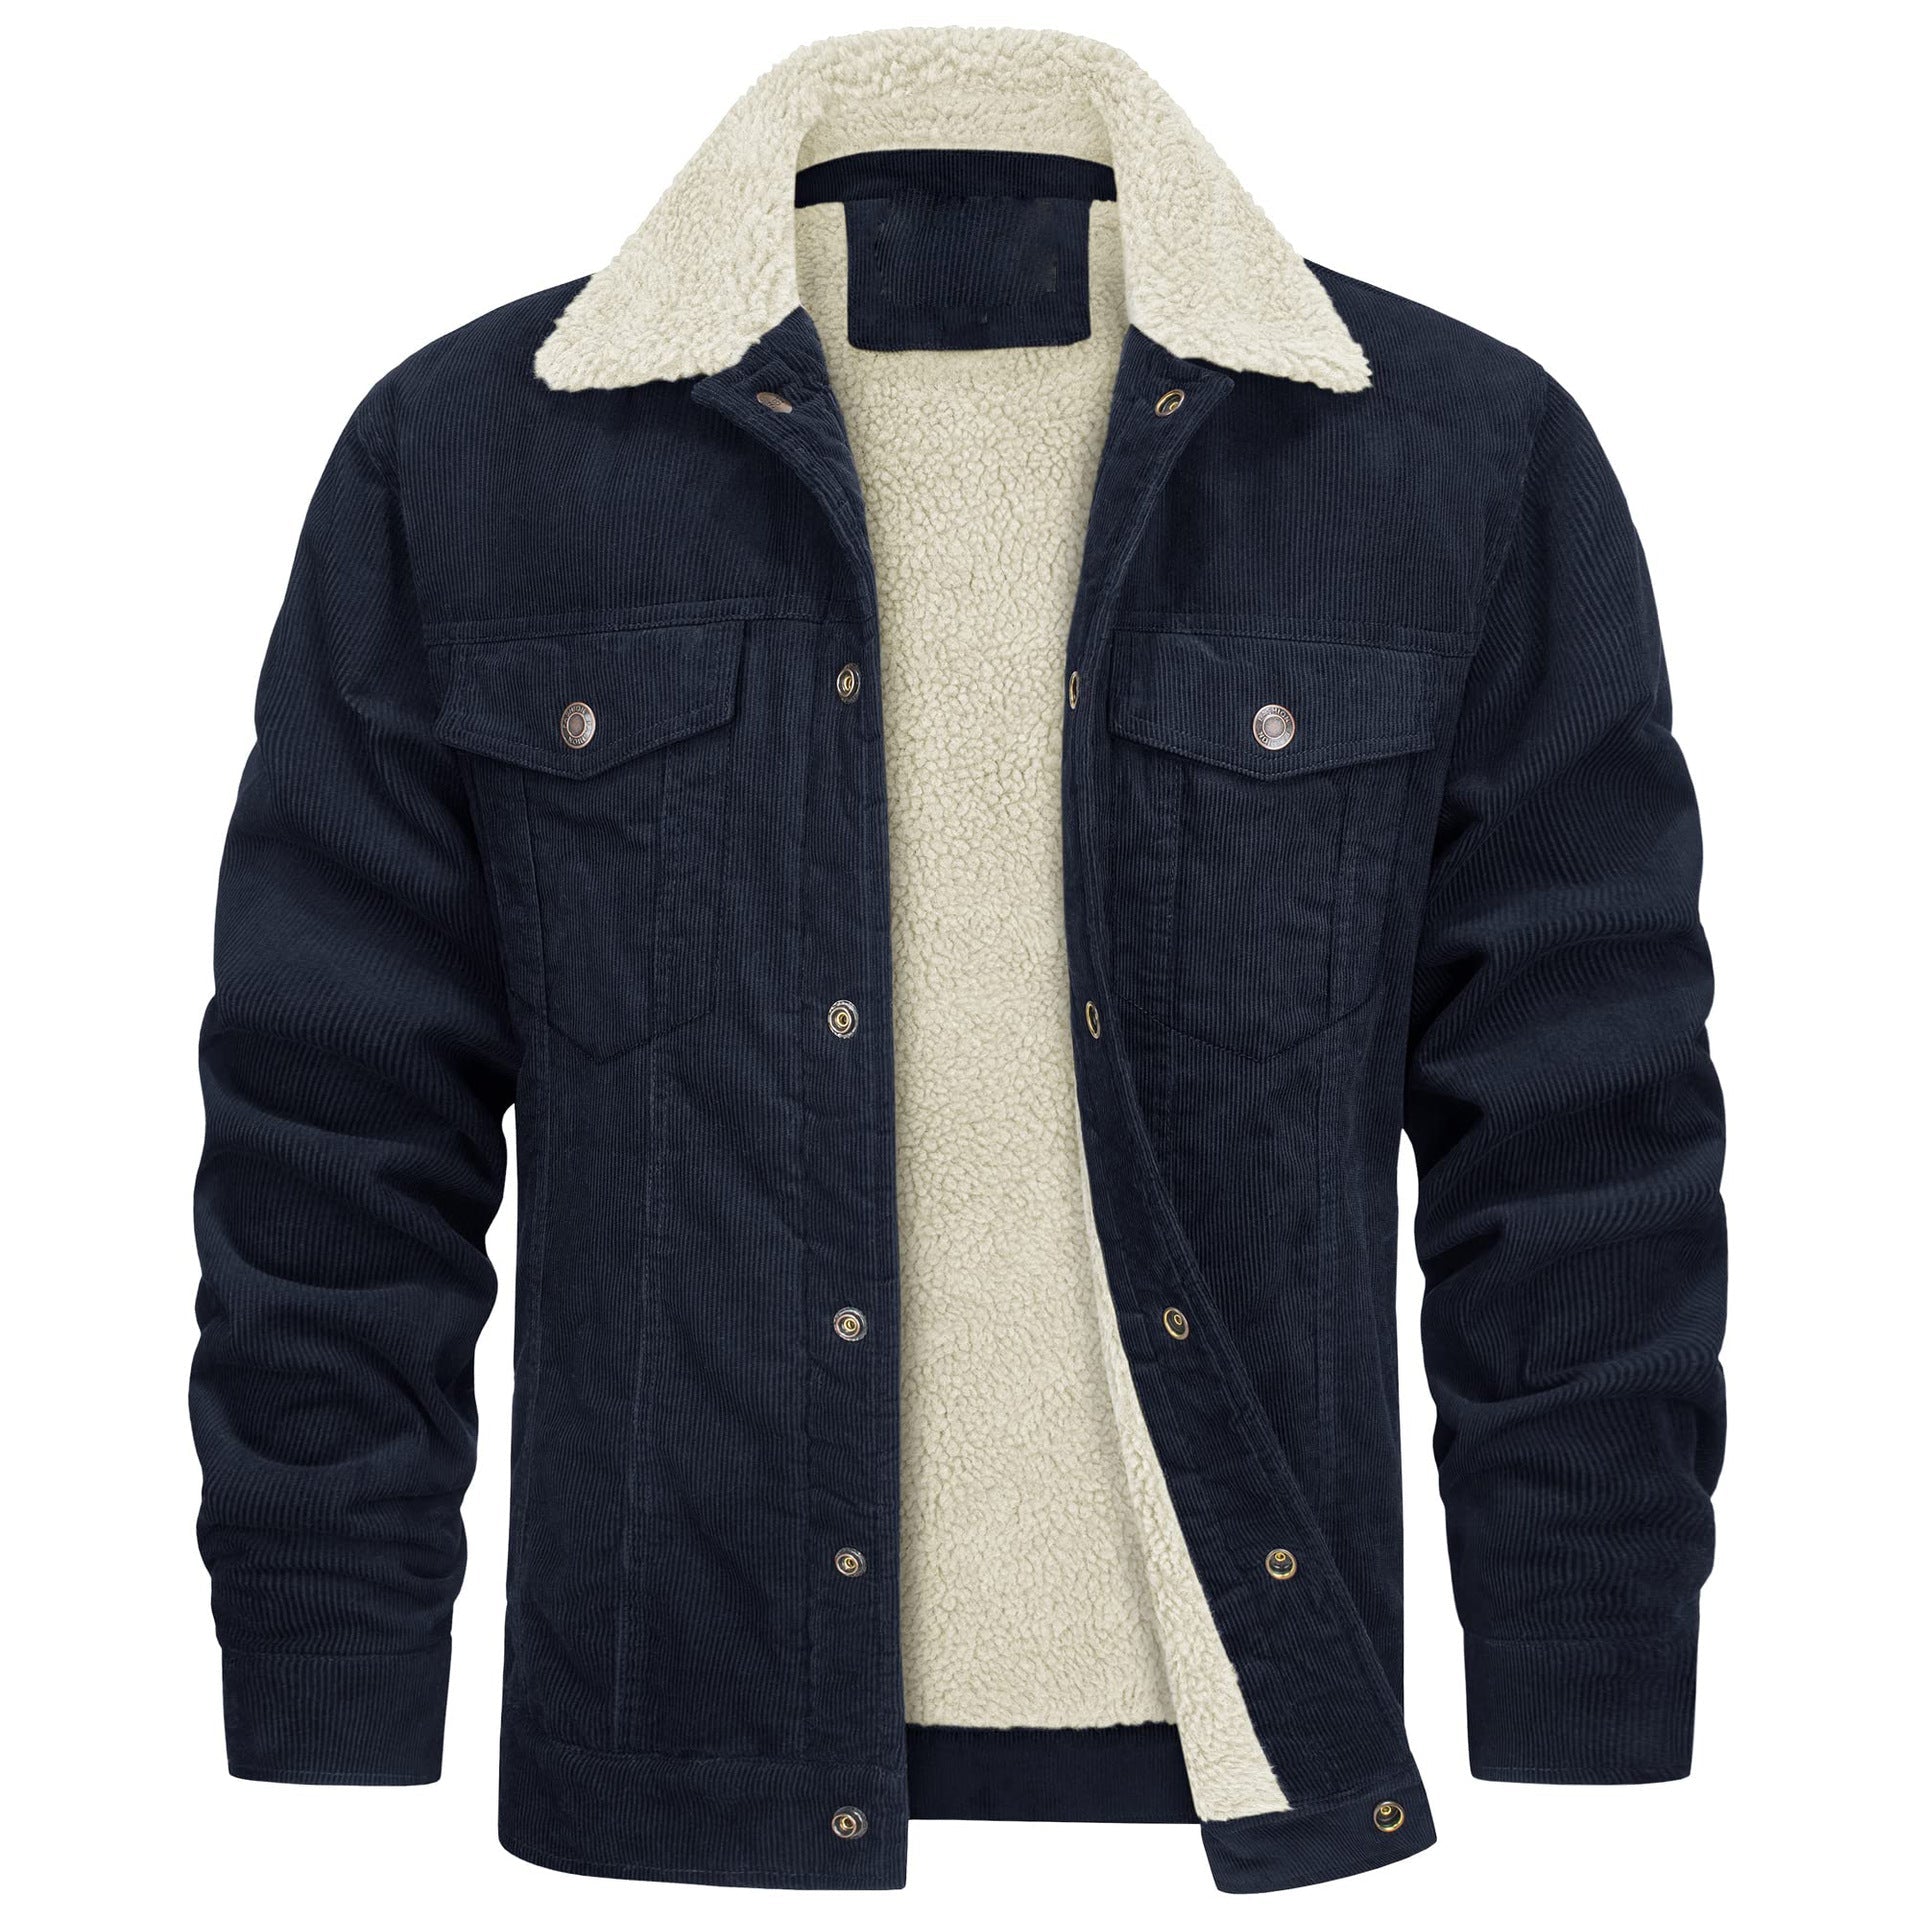 Casual Winter Long Sleeves Velvet Jacket Coats for Men-Coats & Jackets-Navy Blue-S-Free Shipping at meselling99